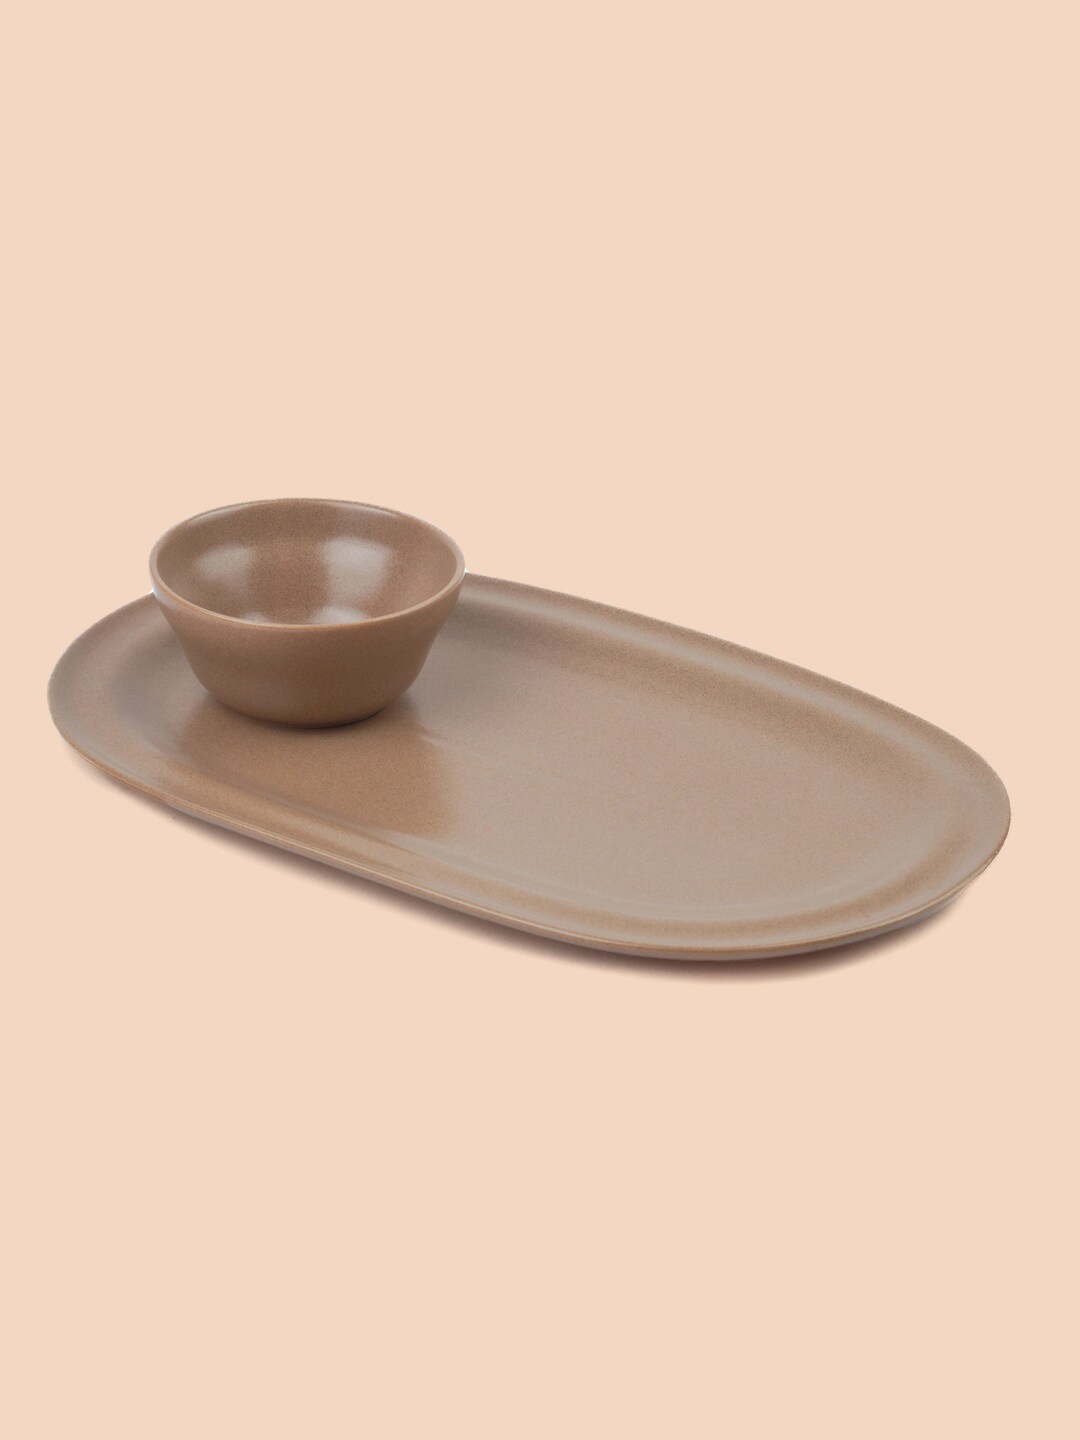 SHAY Brown Porcelain Serving Platter with Dip Bowl